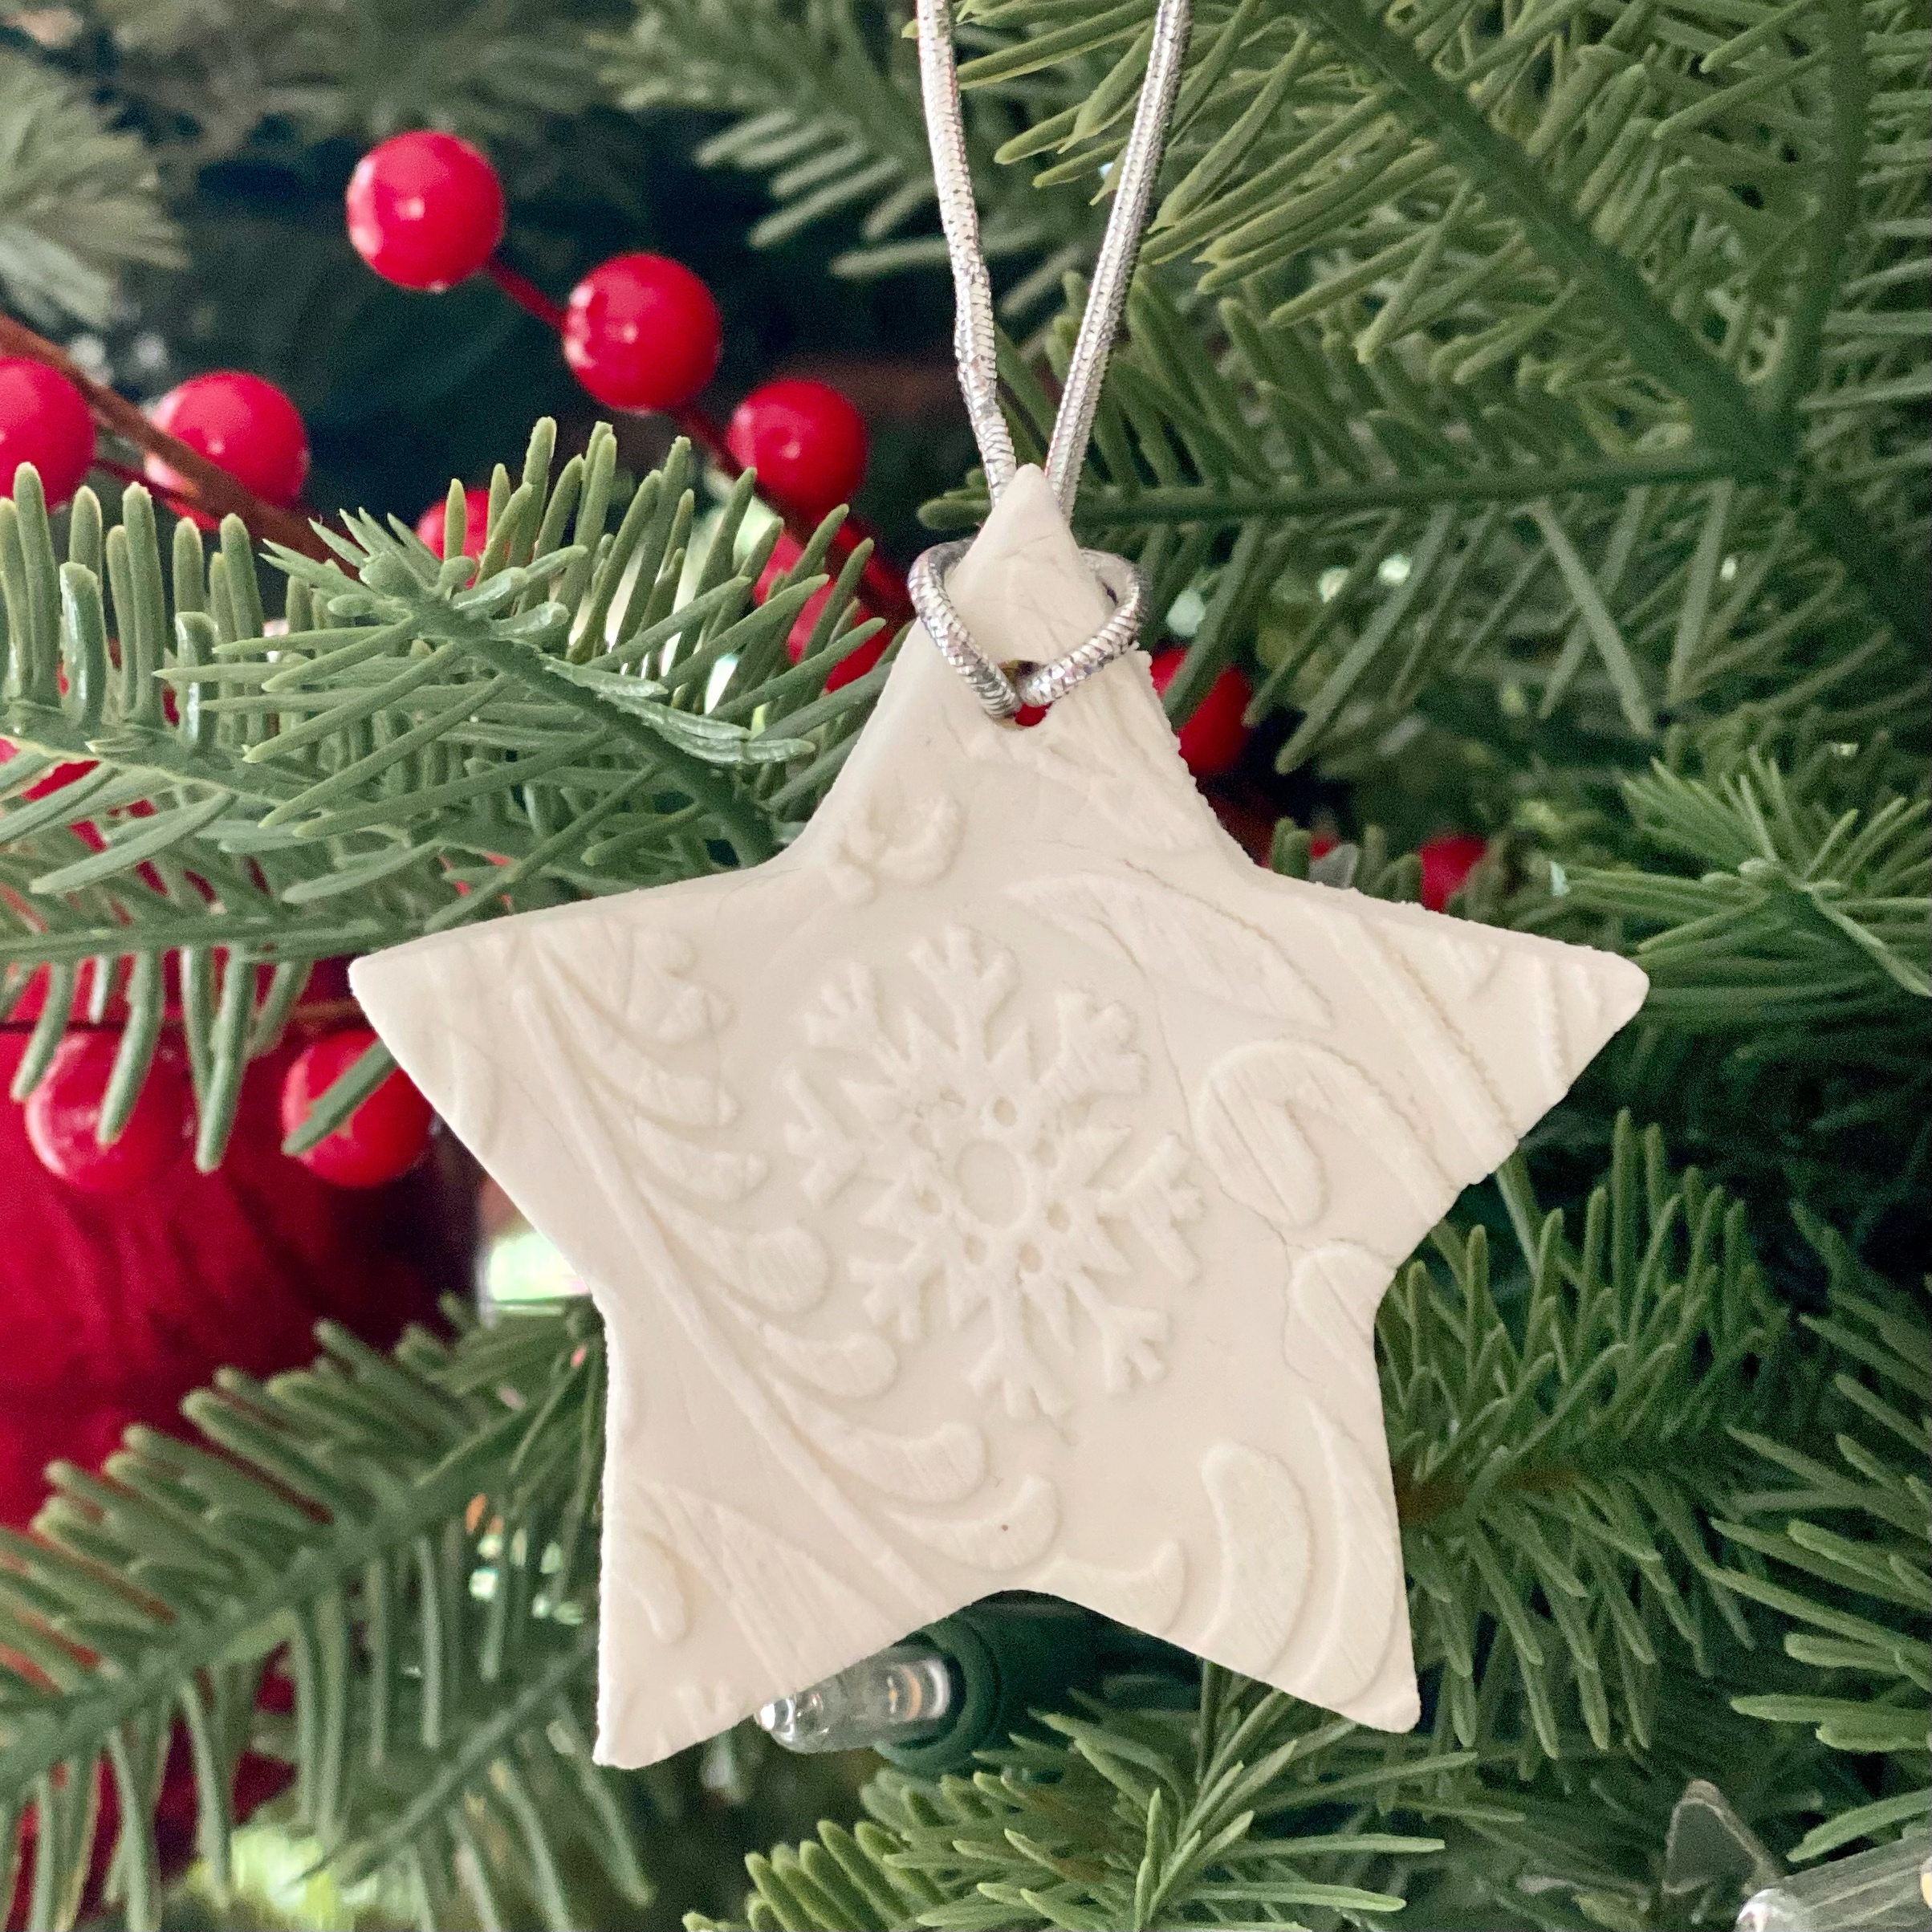 Baking soda dough star ornament hanging on the Christmas tree.